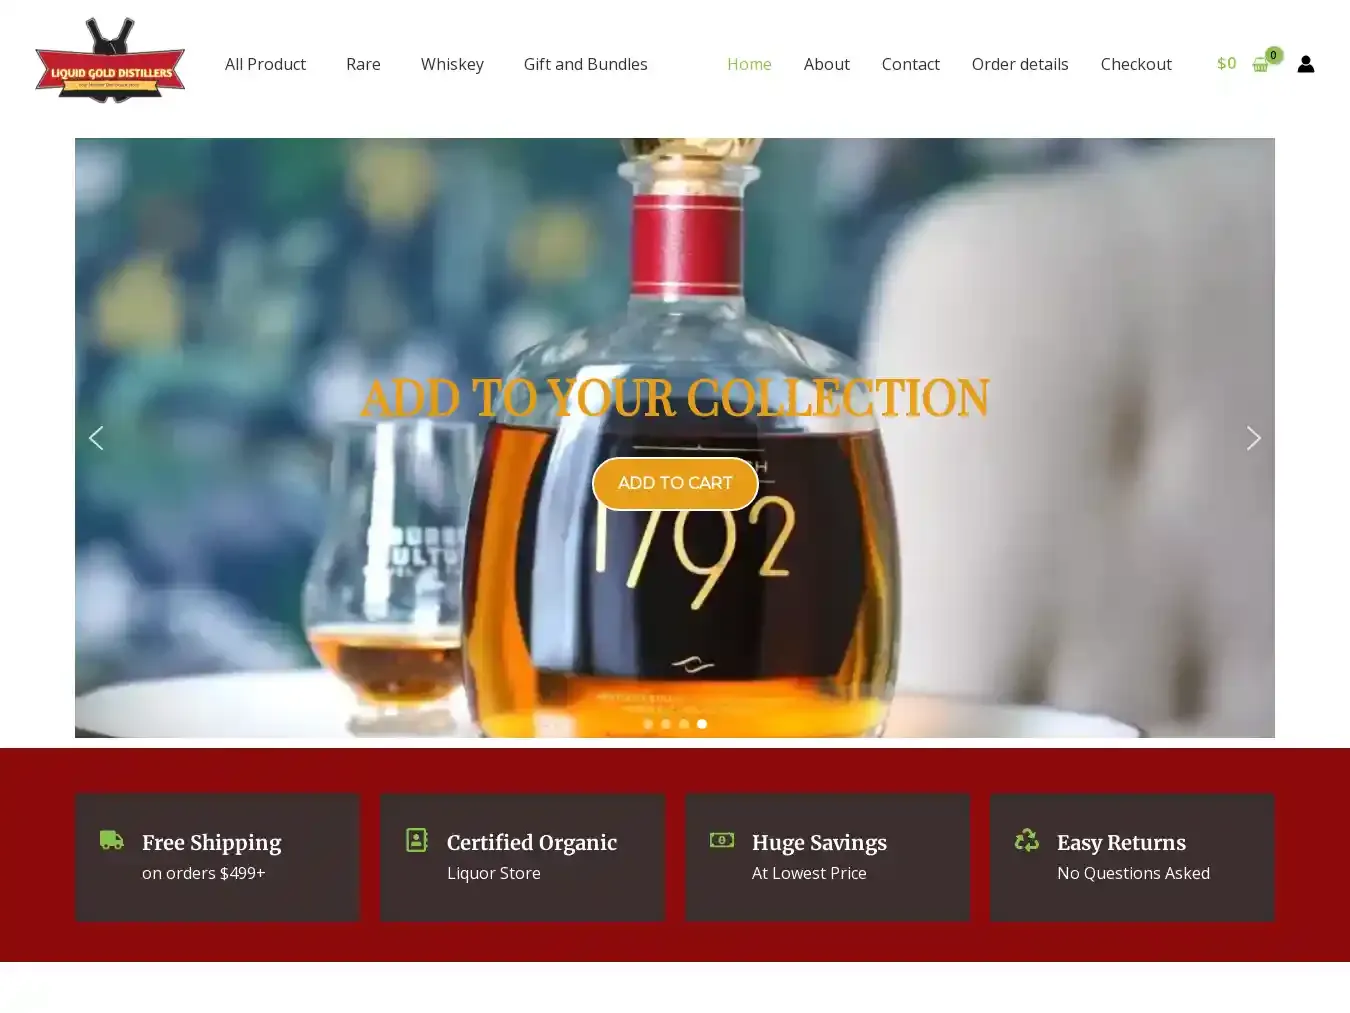 Liquidgolddistillers.com Fraudulent Whisky website.